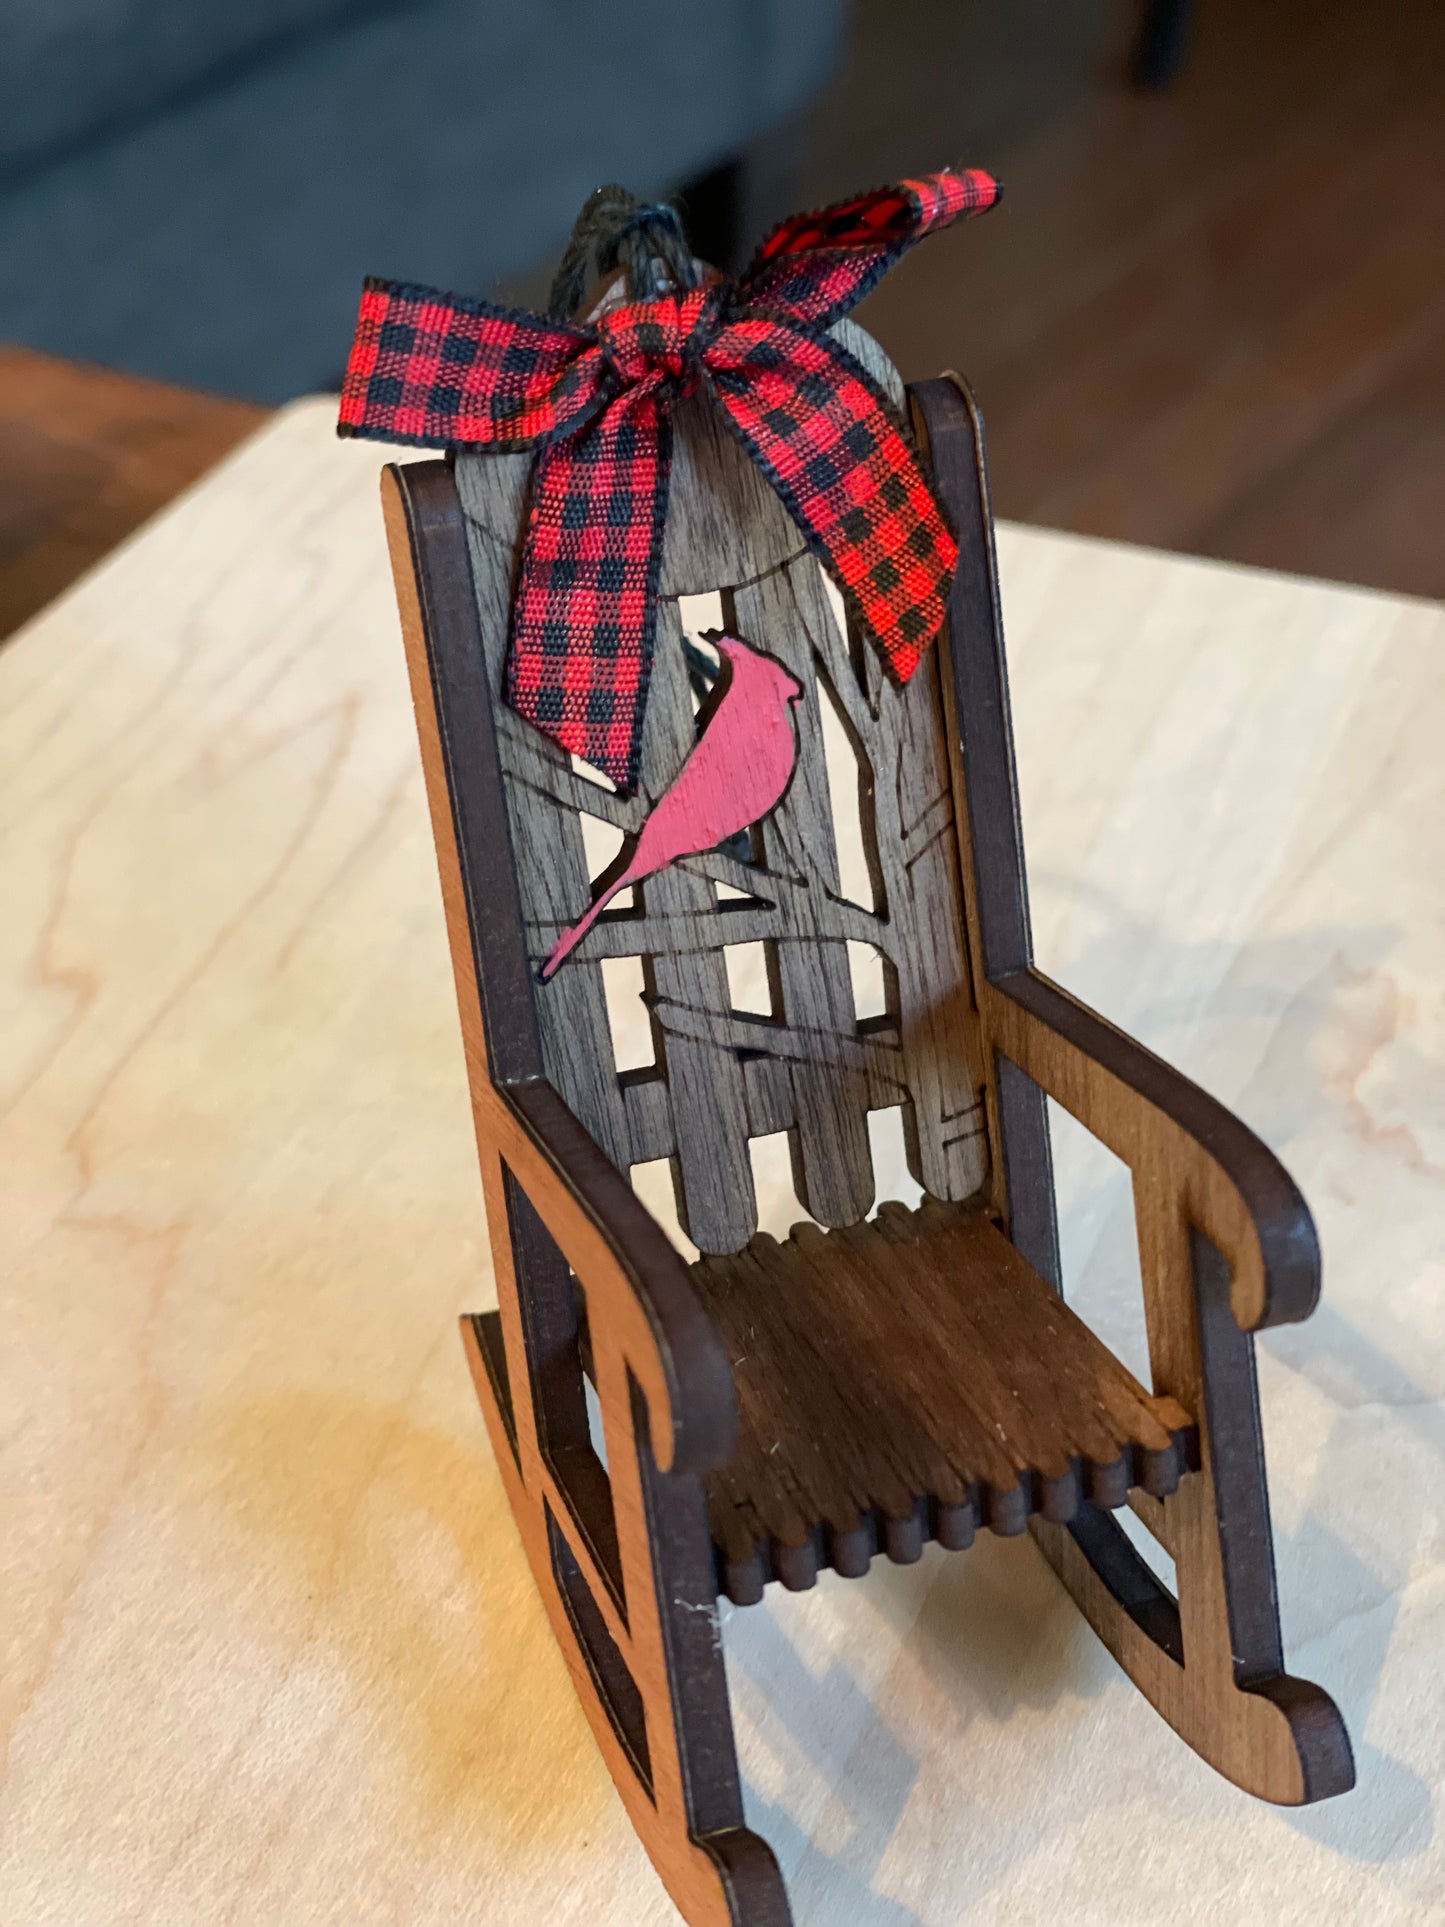 Rocking Chair Ornament